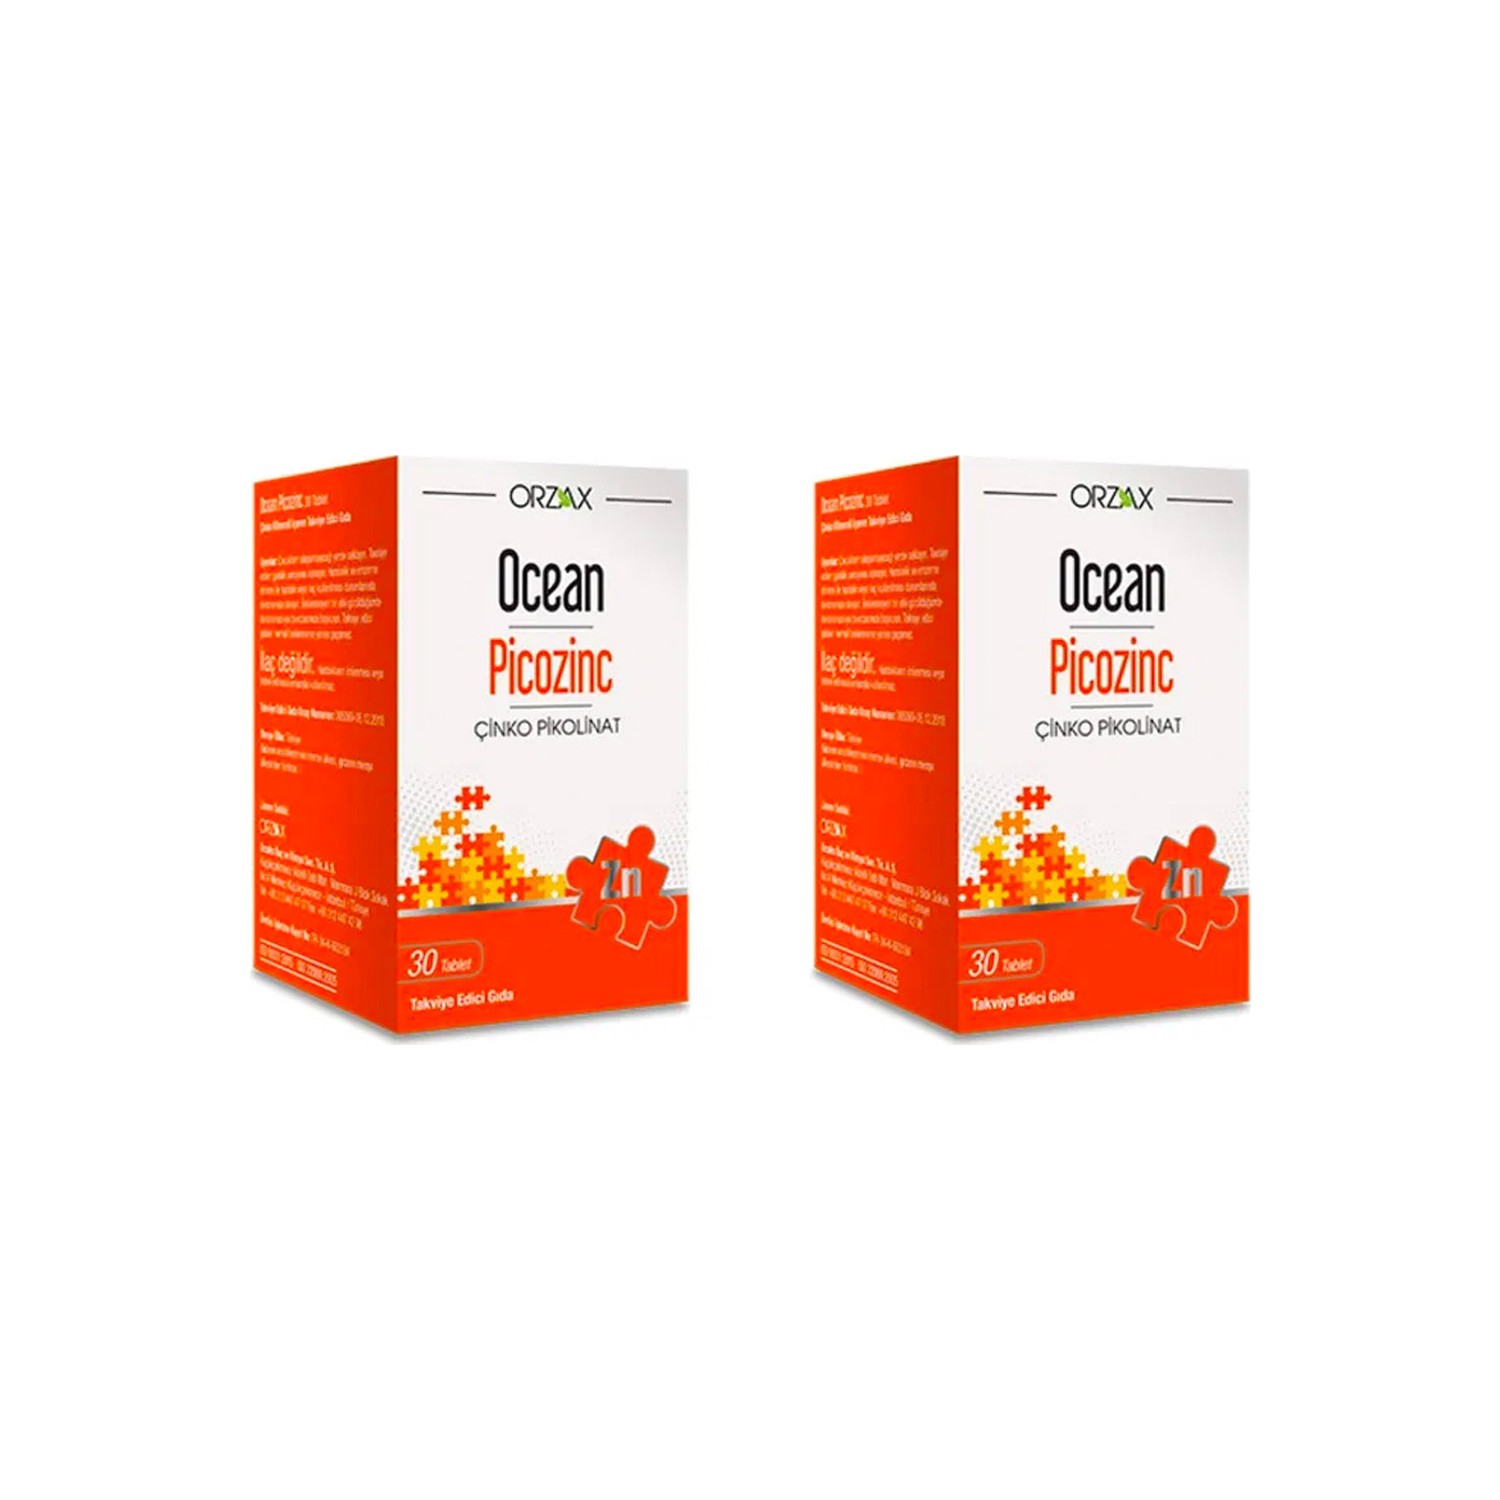 Пищевая добавка Orzax Ocean Picozinc Cinko Picolinate, 2 упаковки по 30 таблеток